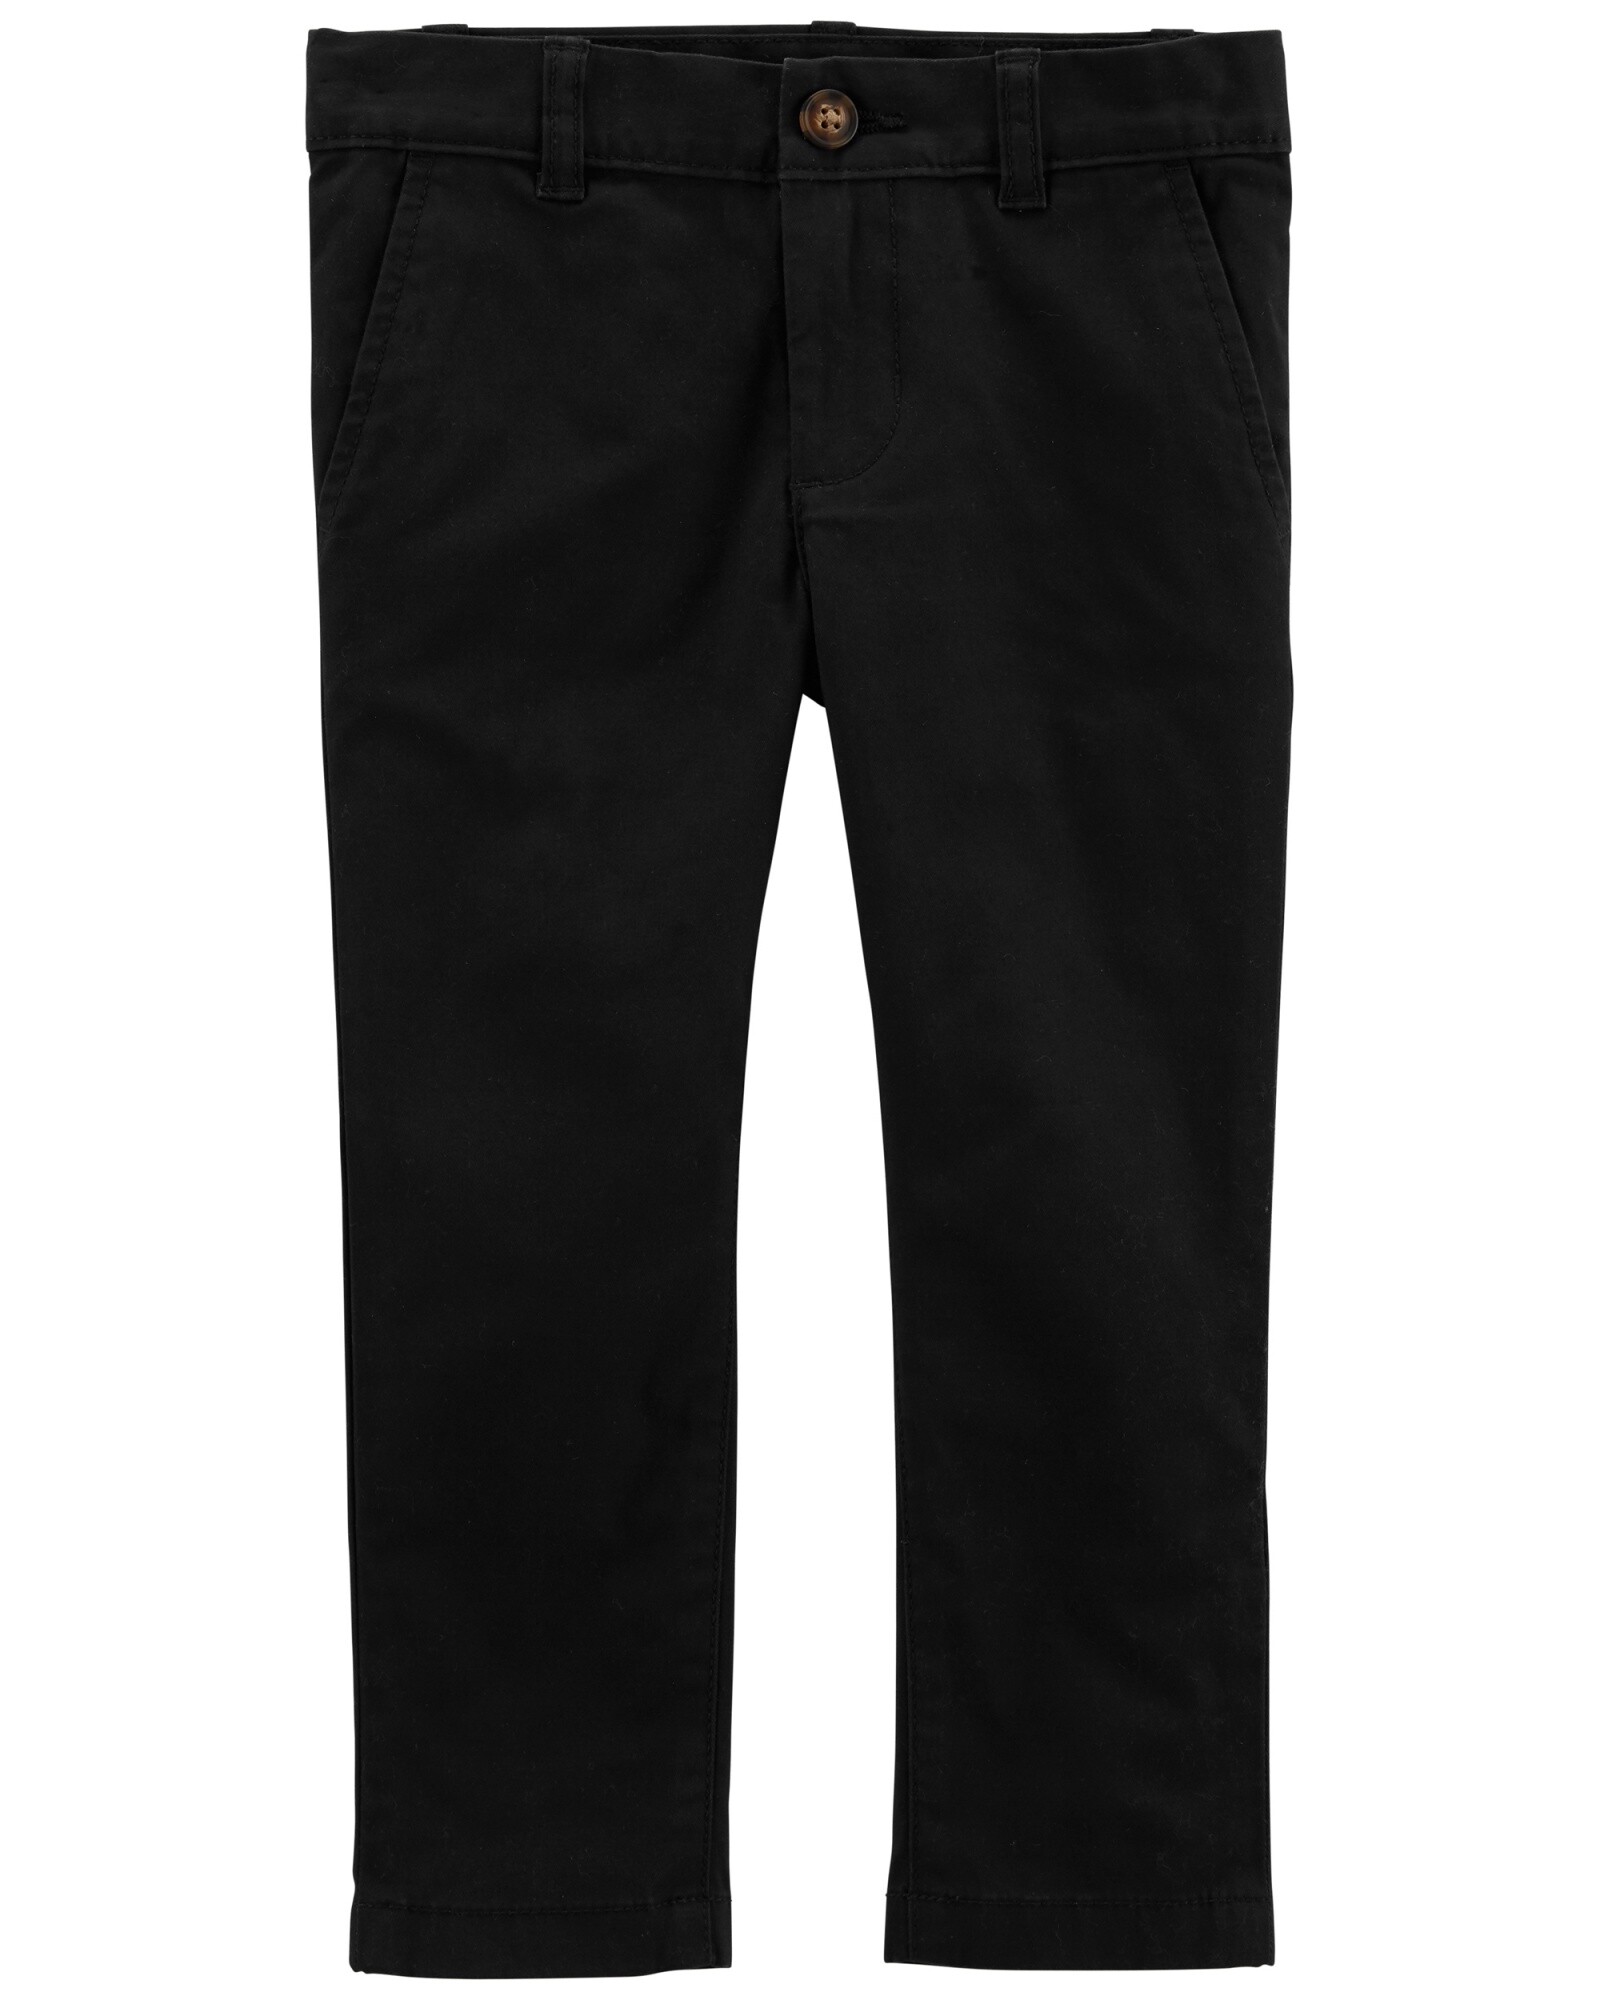 Pantalón de sarga clásico color negro Sin color